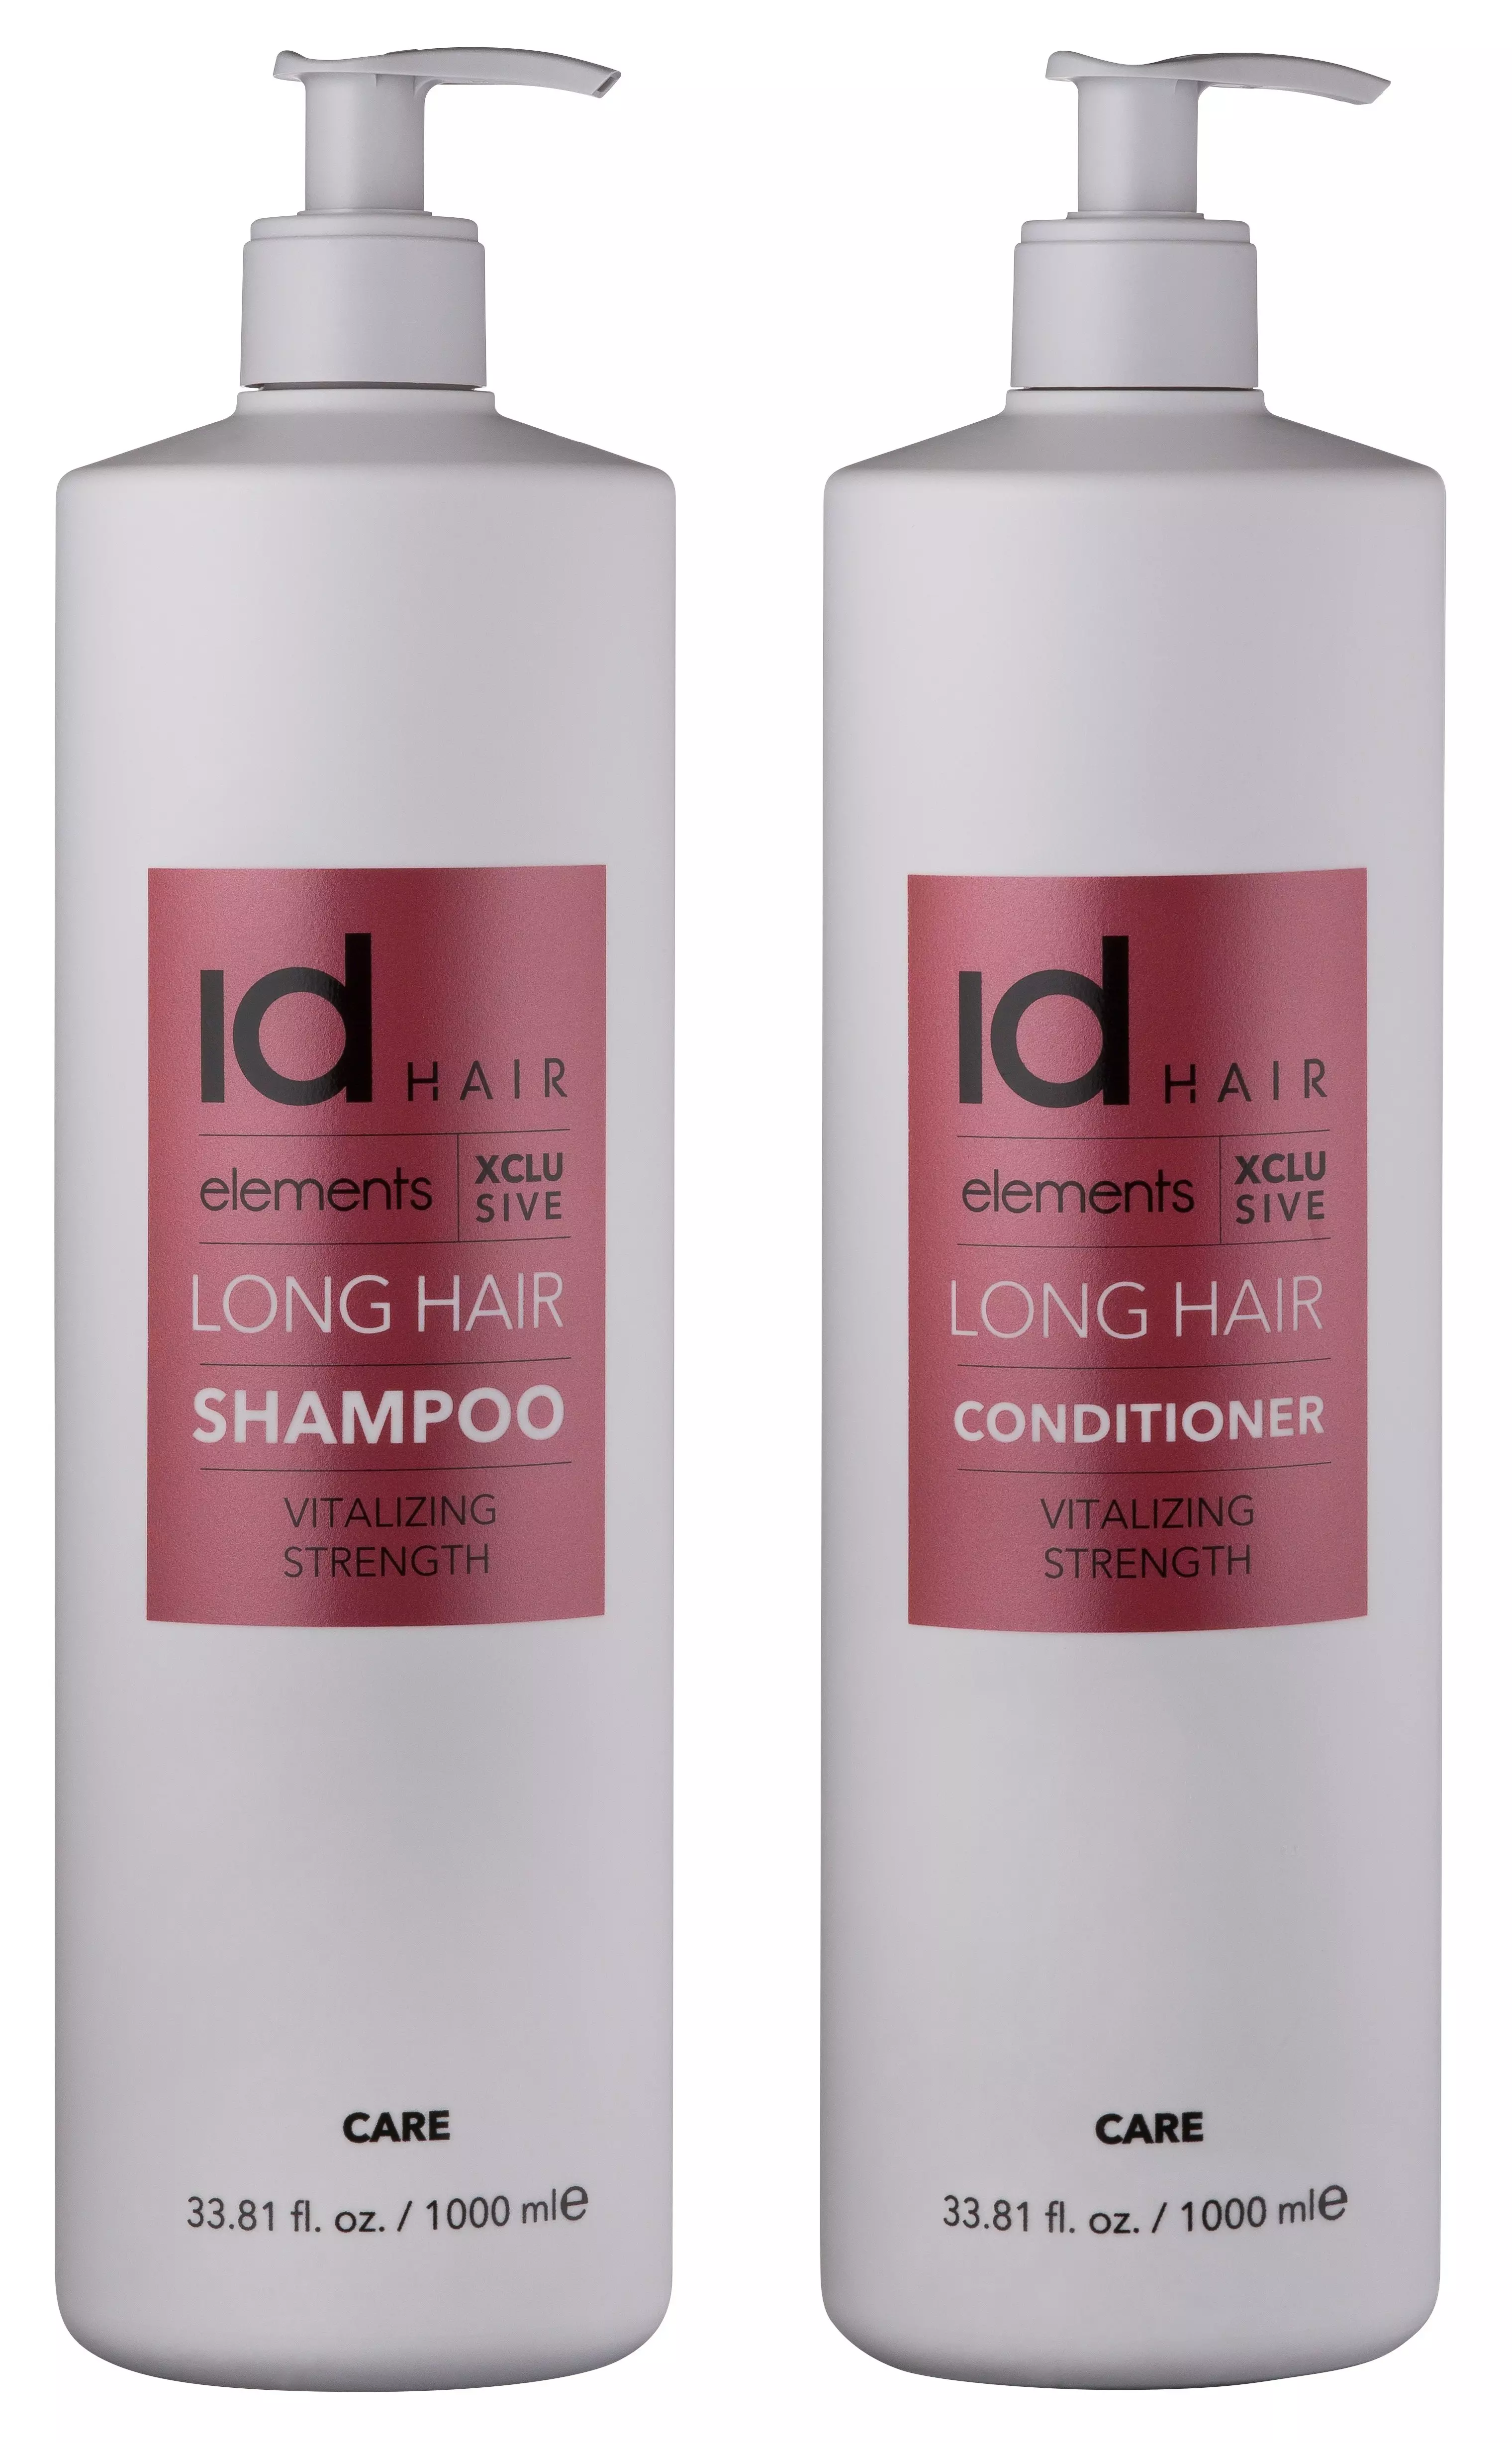 Idhair Elements Xclusive Long Hair Shampoo